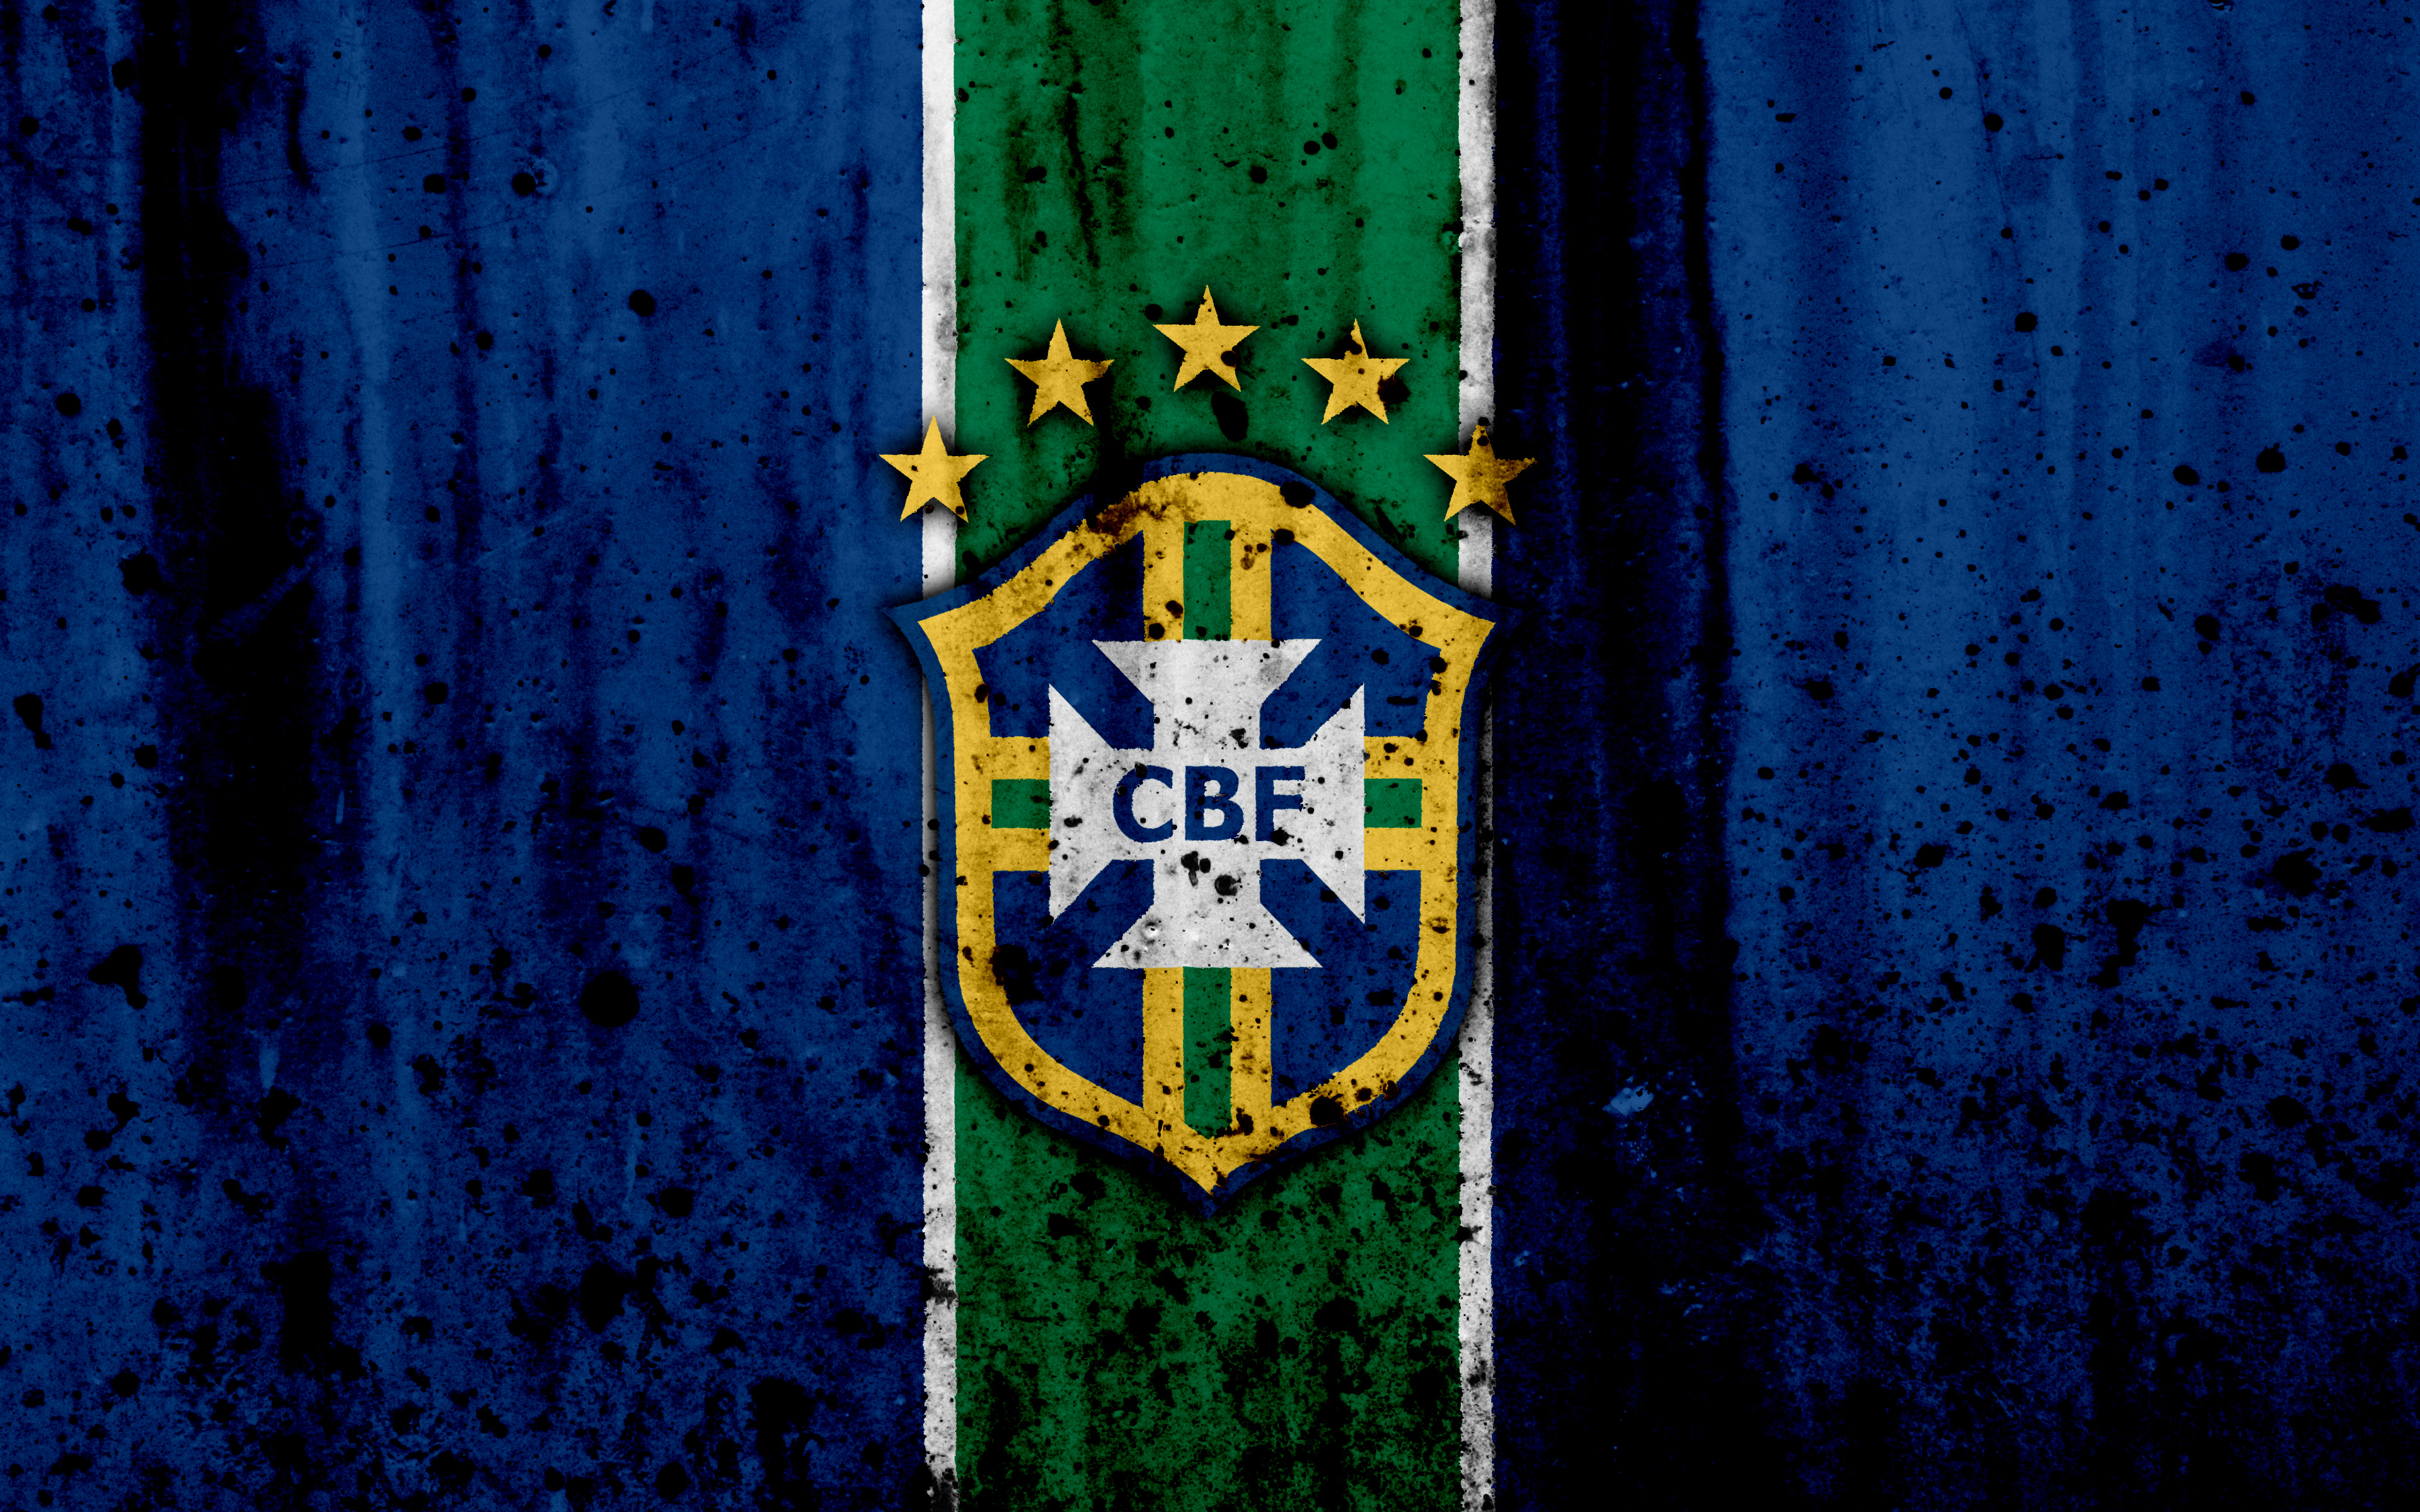 451319 descargar imagen selección de fútbol de brasil, deporte, brasil, emblema, logo, fútbol: fondos de pantalla y protectores de pantalla gratis